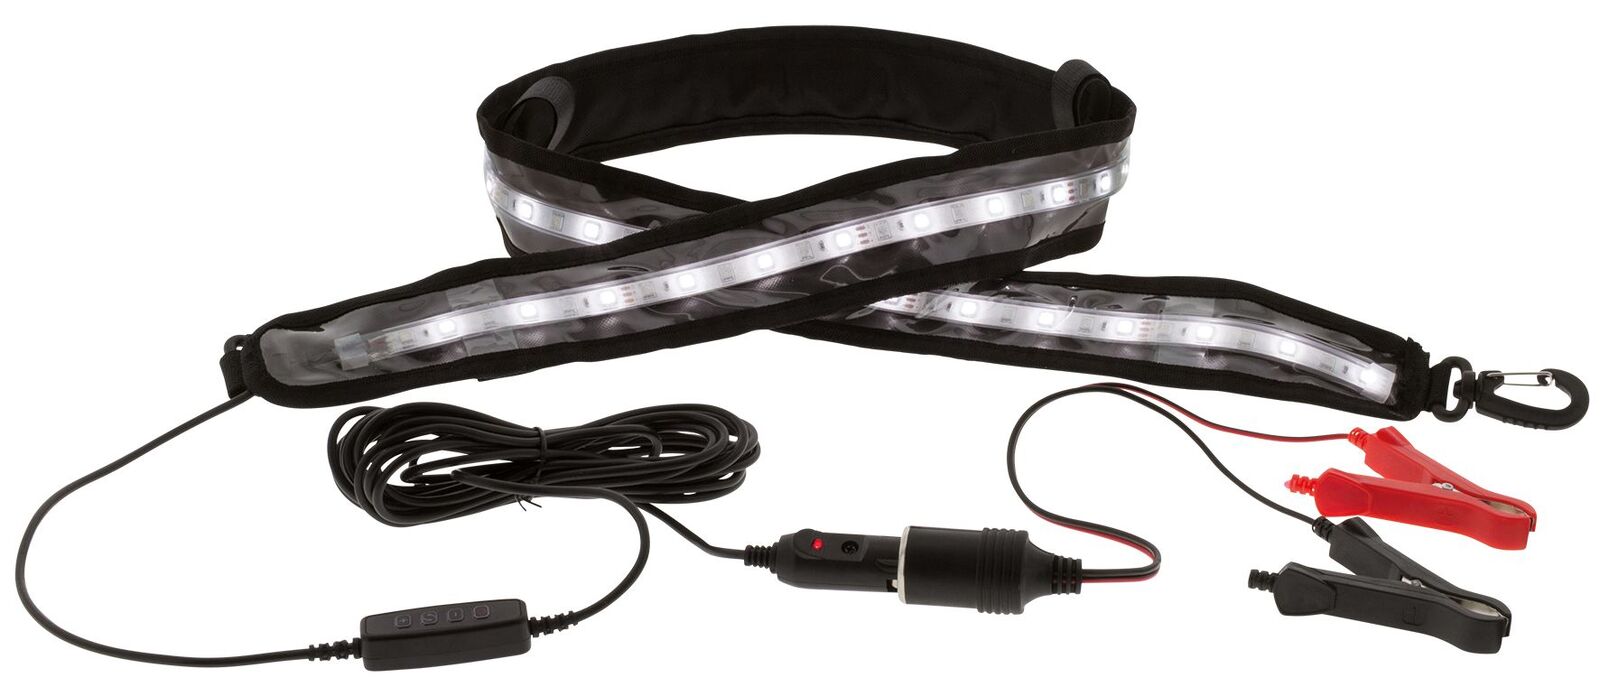 Flexible LED Camping Strip Lamp - White Illumination